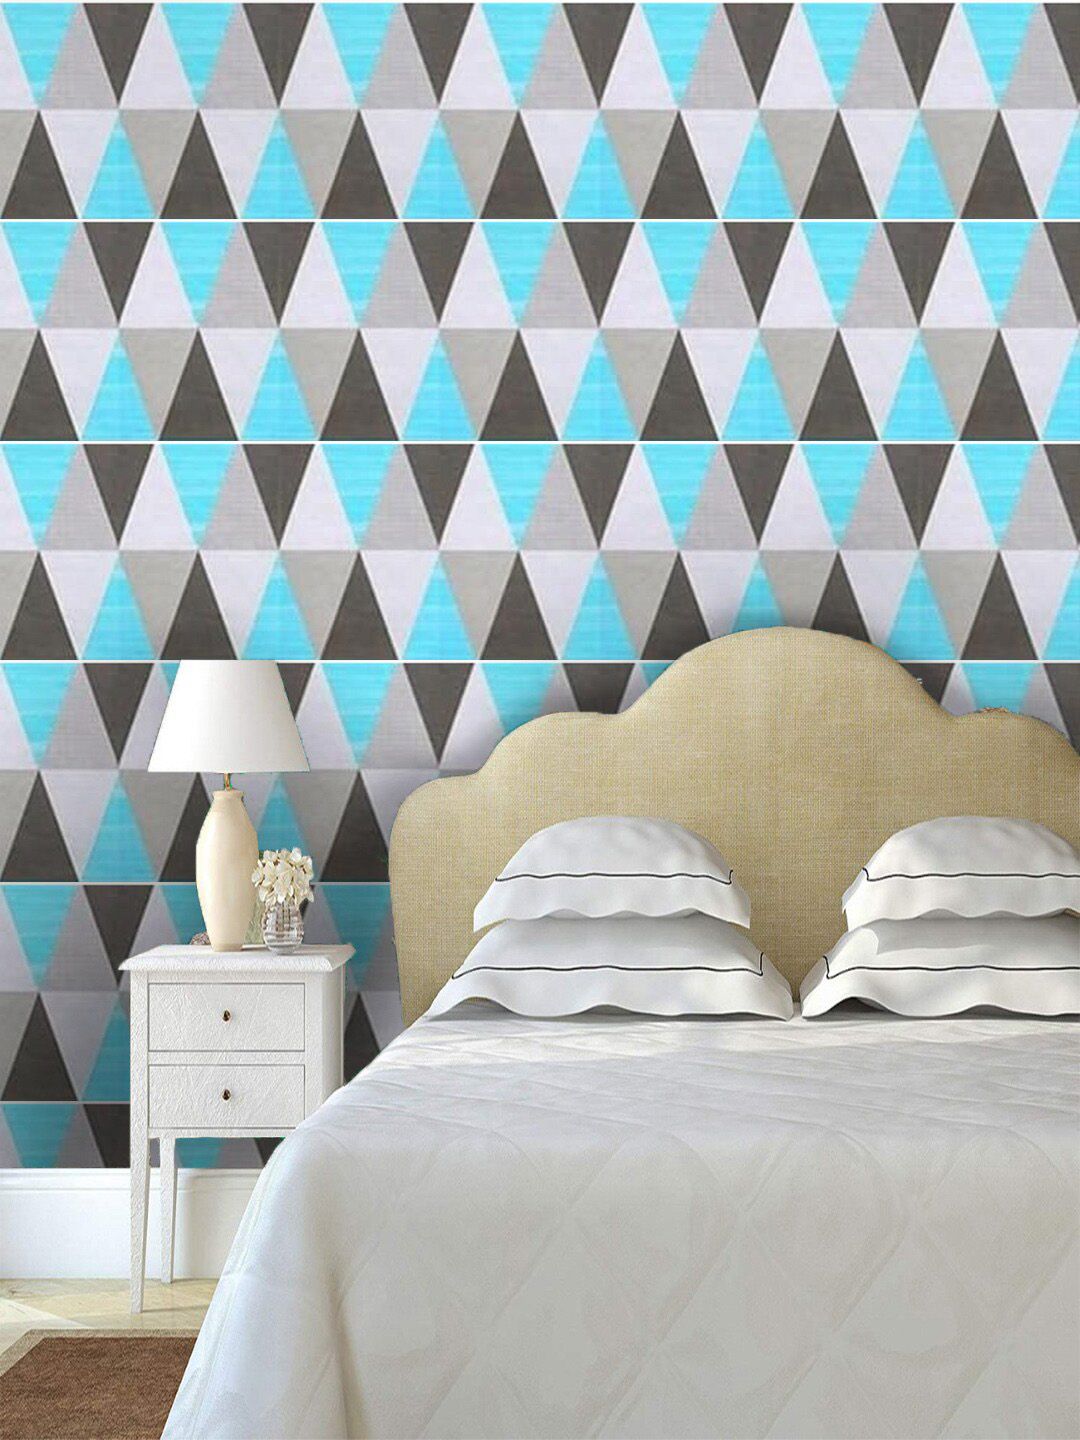 Jaamso Royals Turquoise Blue & Grey Geometric Design Self-Adhesive Waterproof Wallpaper Price in India